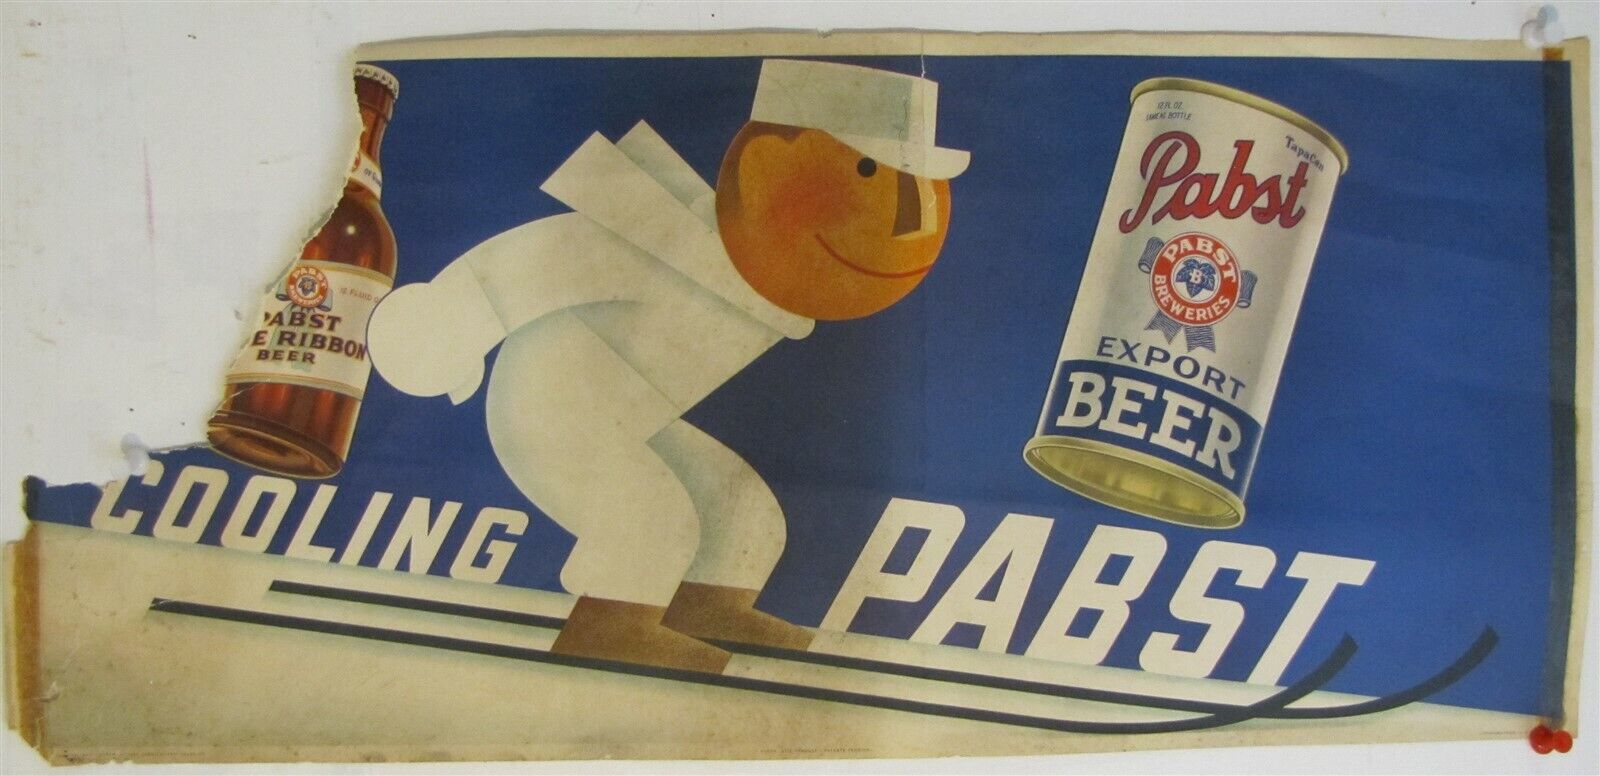 Pabst Export Beer & Blue Ribbon Paper Sign No. 4011 1937 21